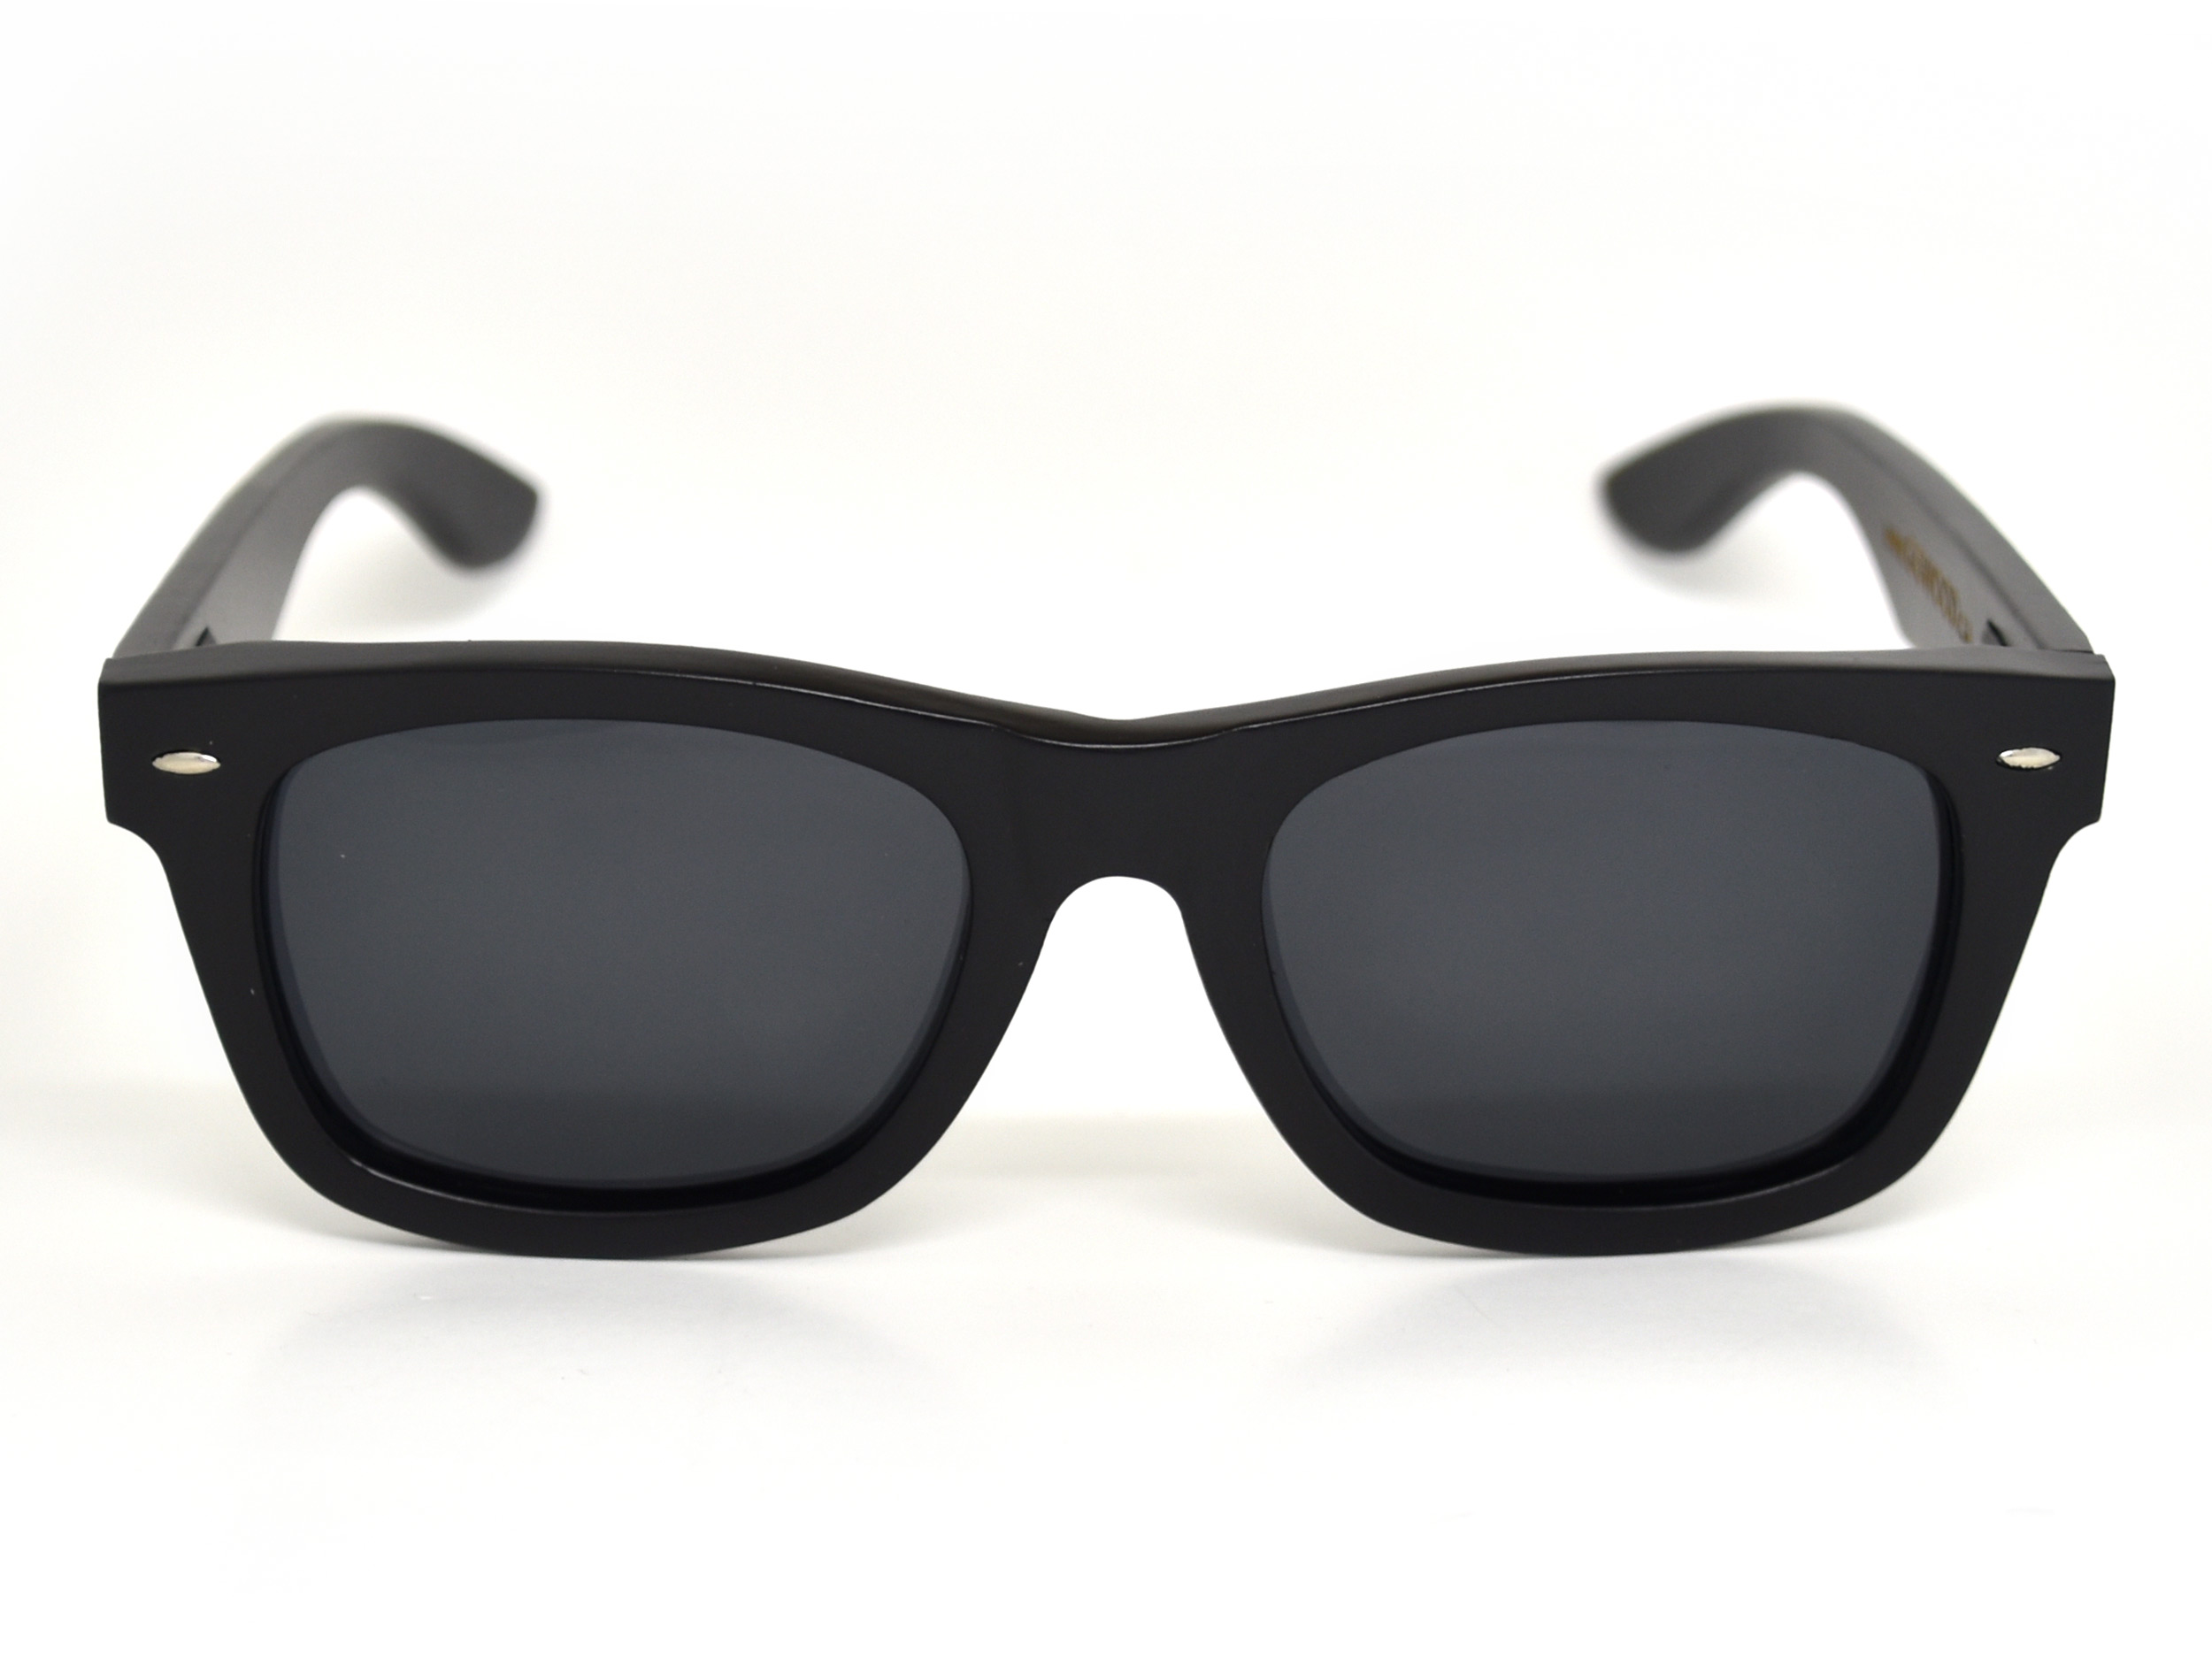 wayfarer style sunglasses black front